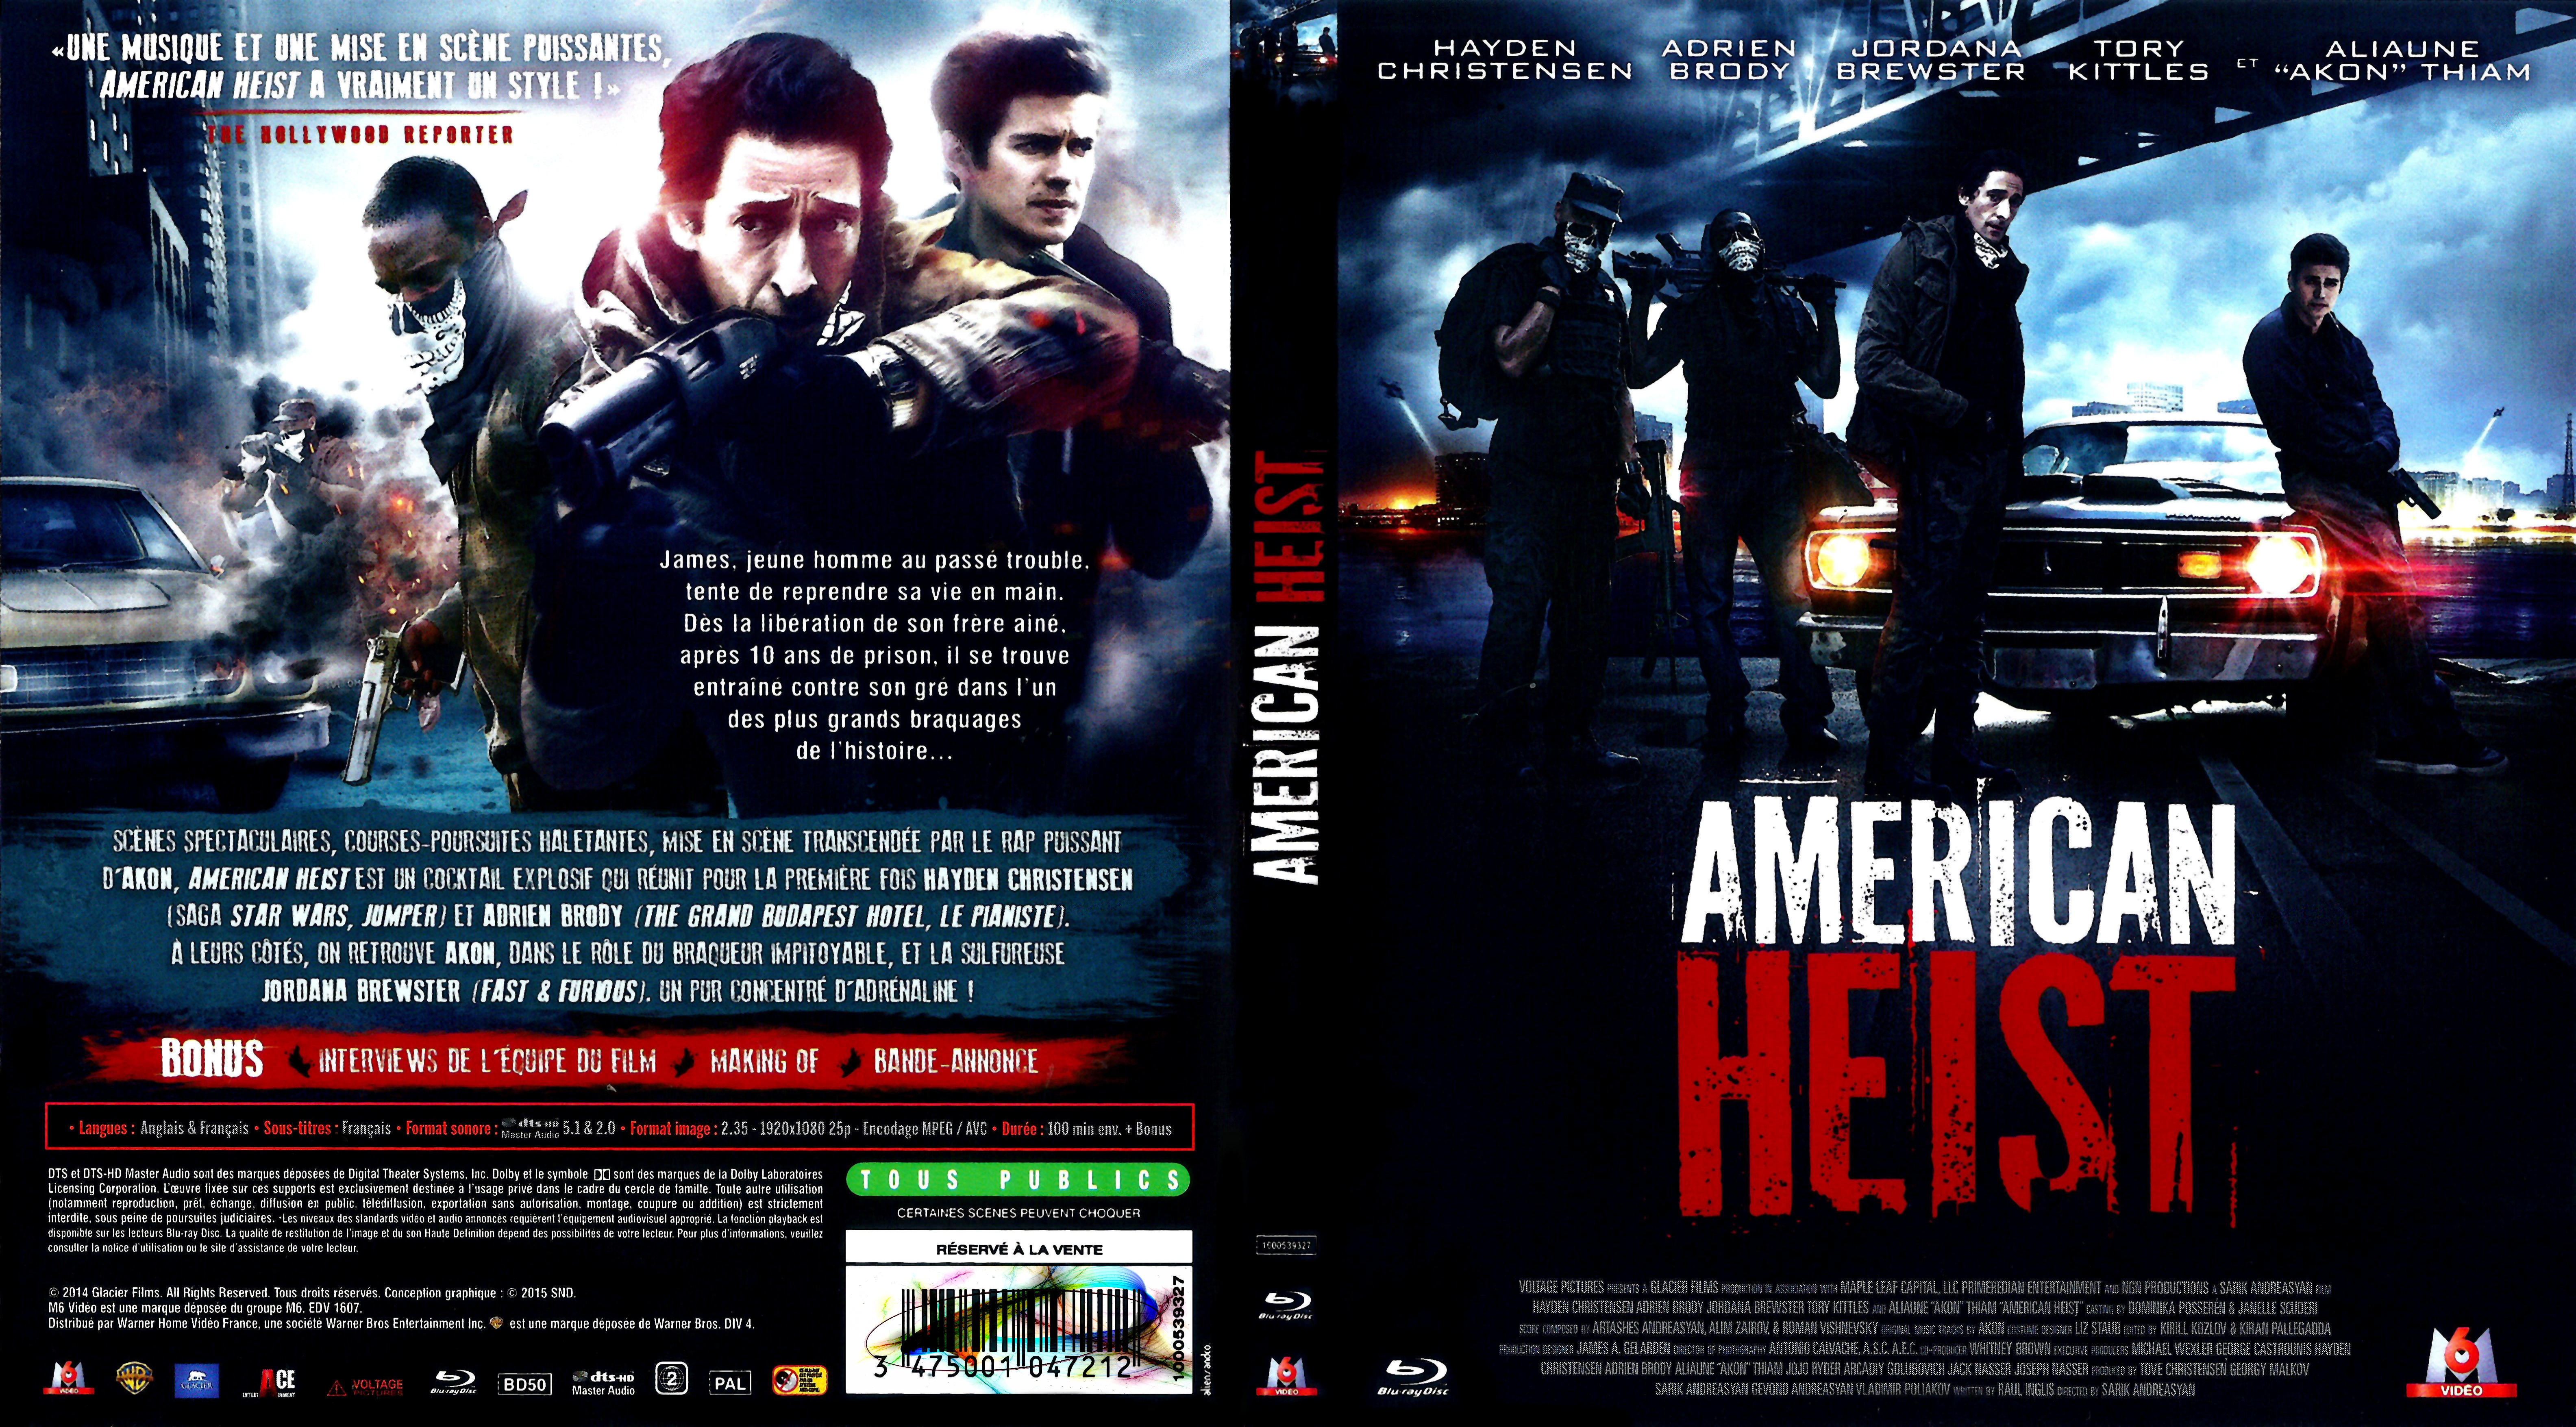 Jaquette DVD American heist (BLU-RAY)